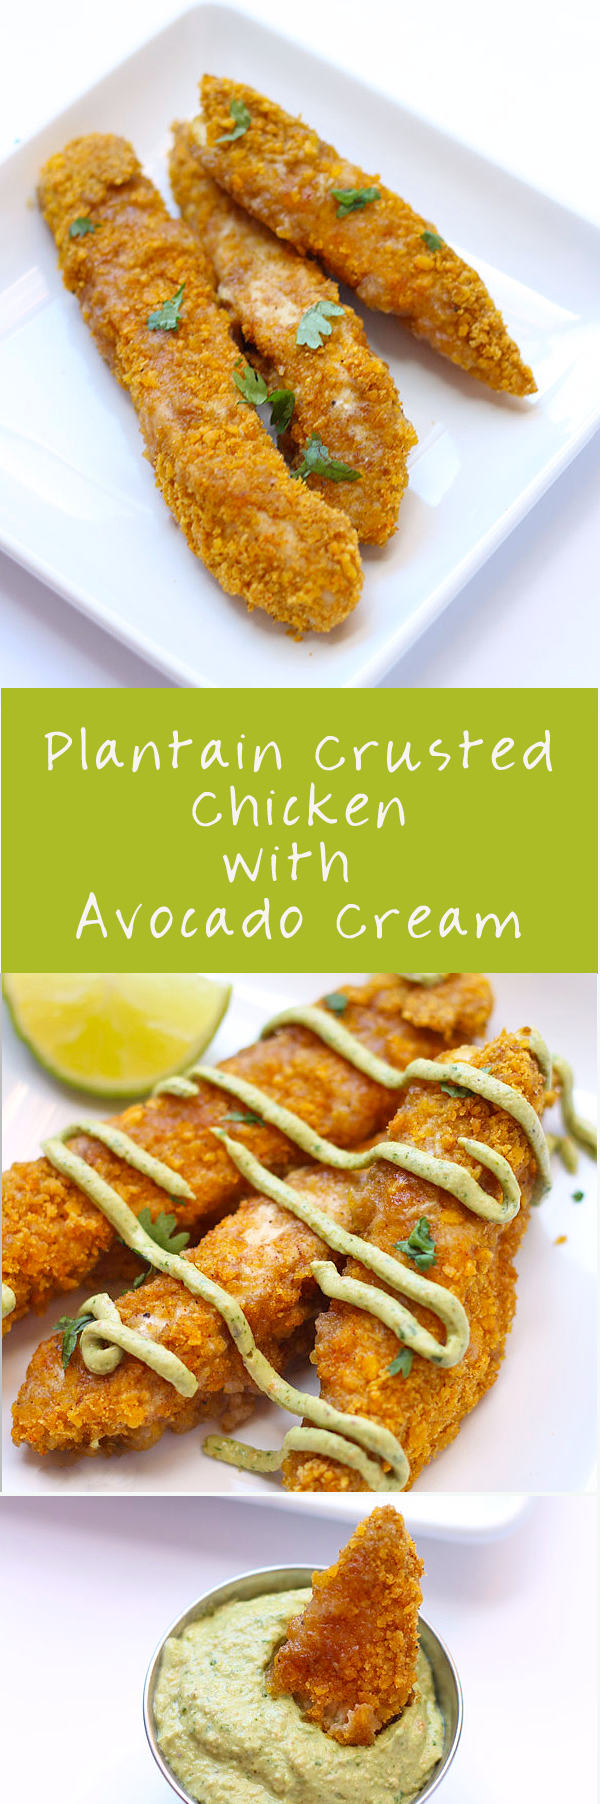 Plantain crusted chicken with Avocado Cream - AMAZING crispy baked chicken with a zesty avocado sauce!